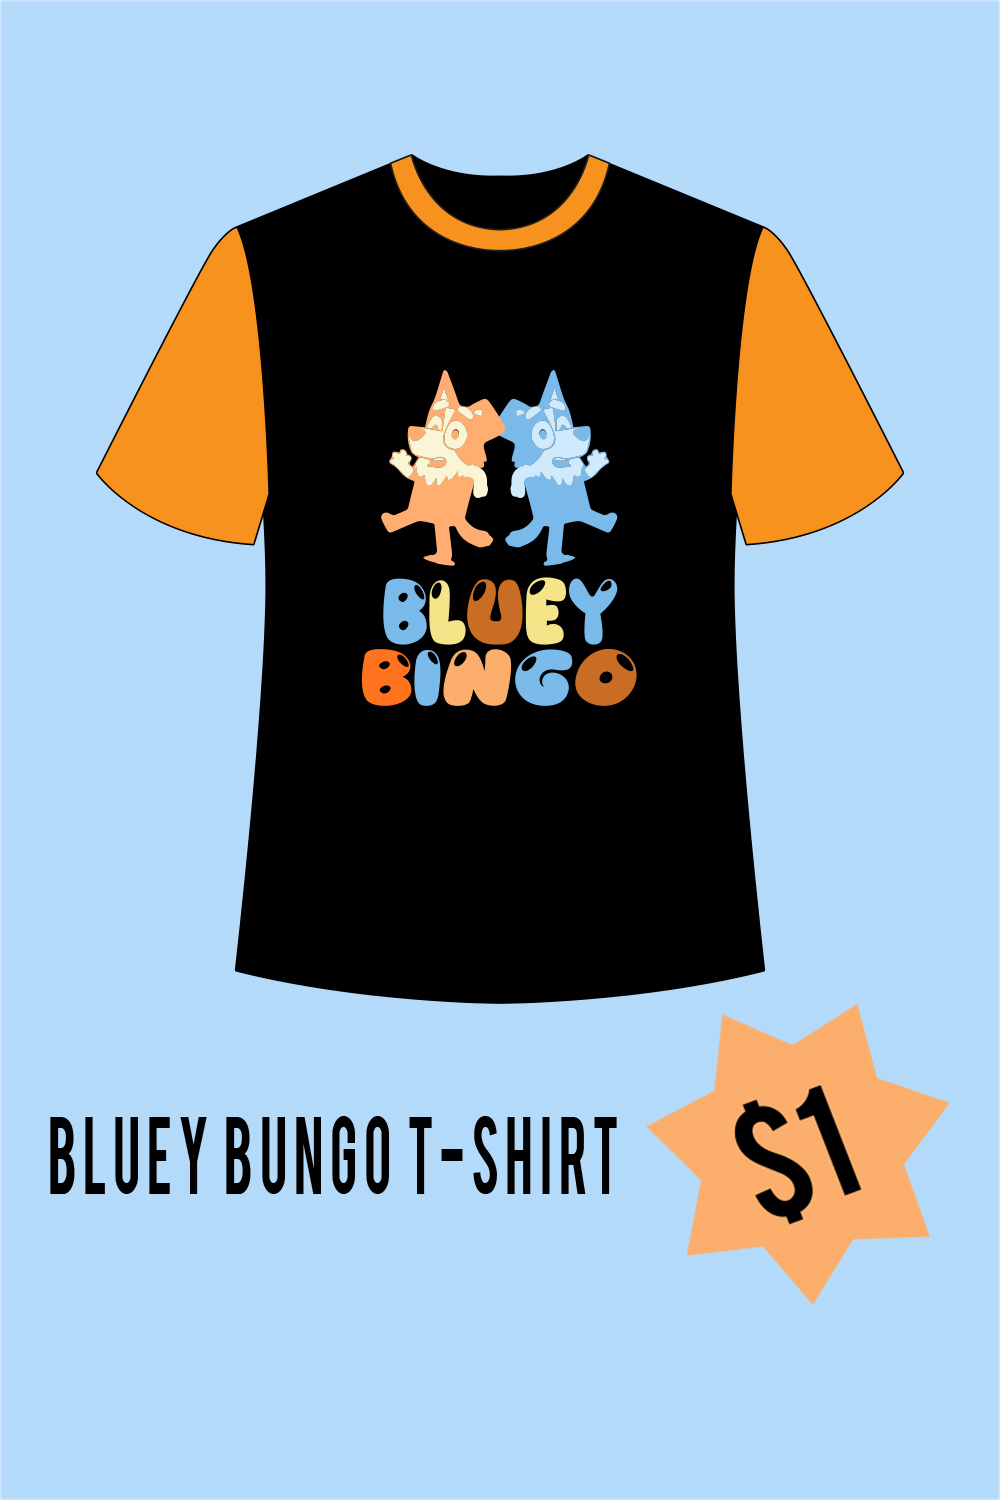 bluey bingo vintage illustratoon vector t shirt design 653